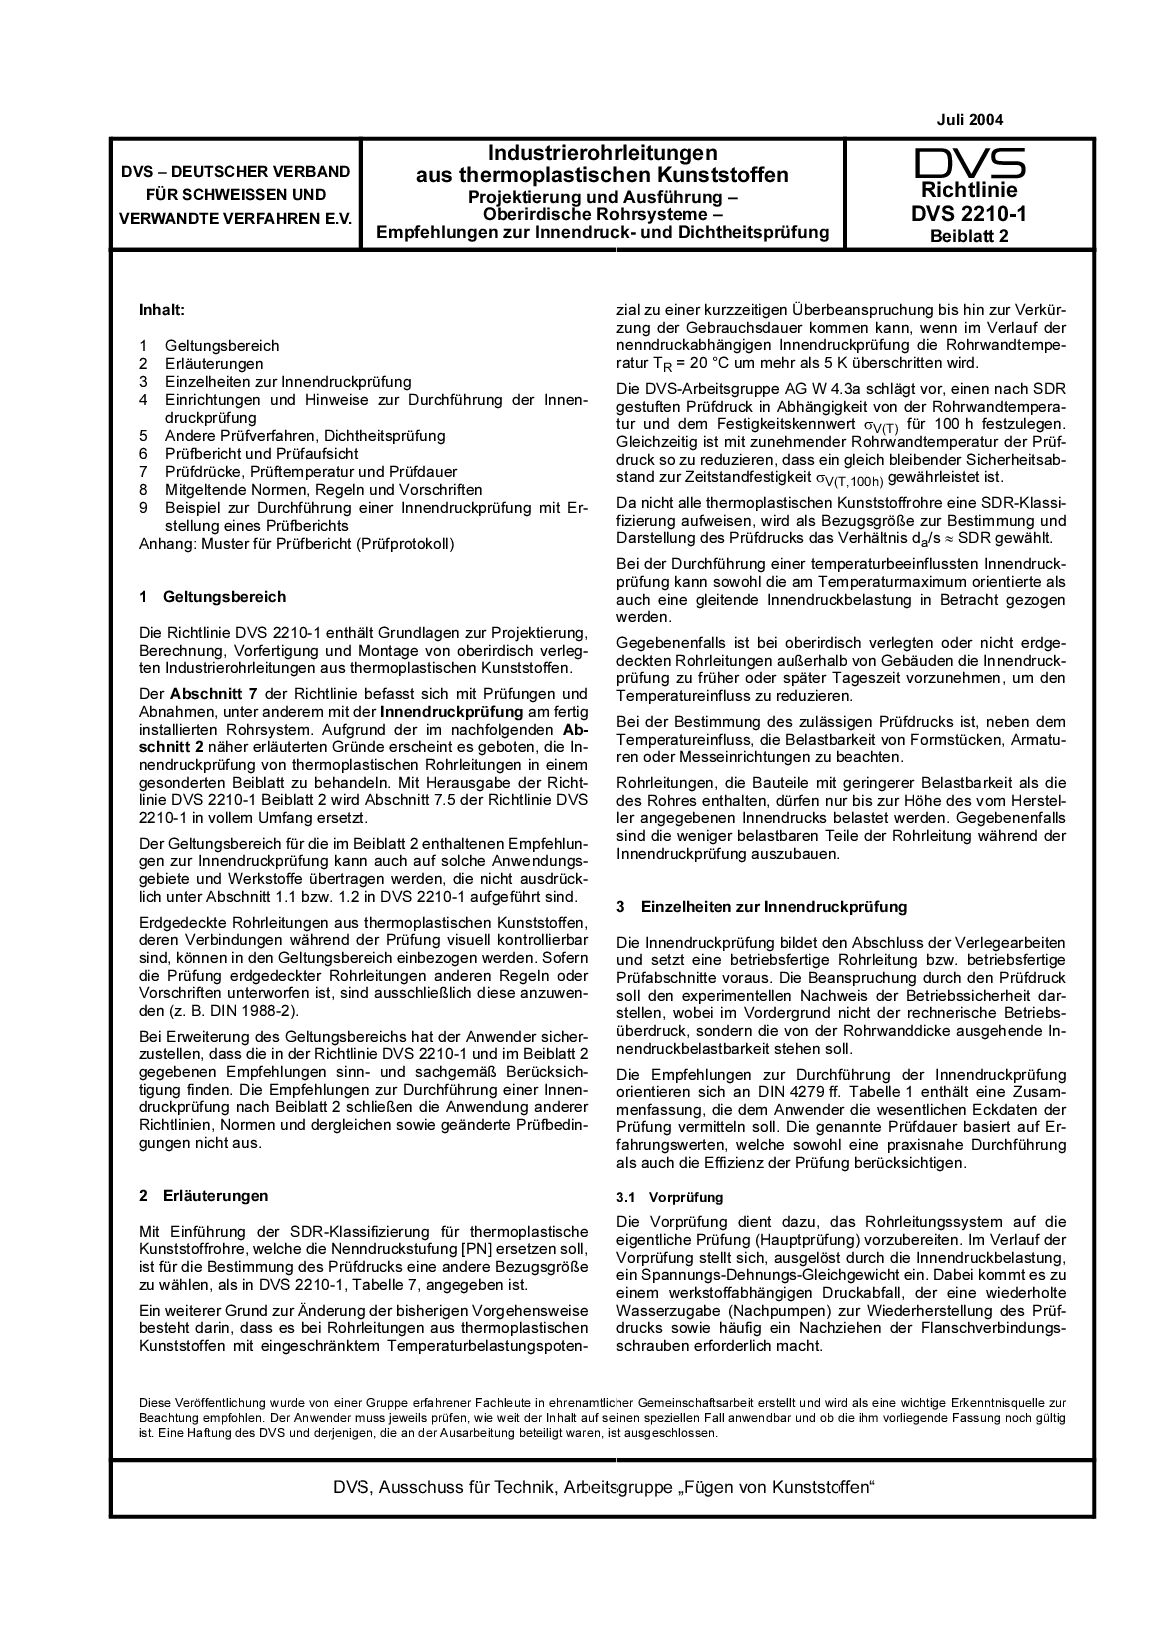 DVS 2210-1 Beiblatt 2-2004封面图